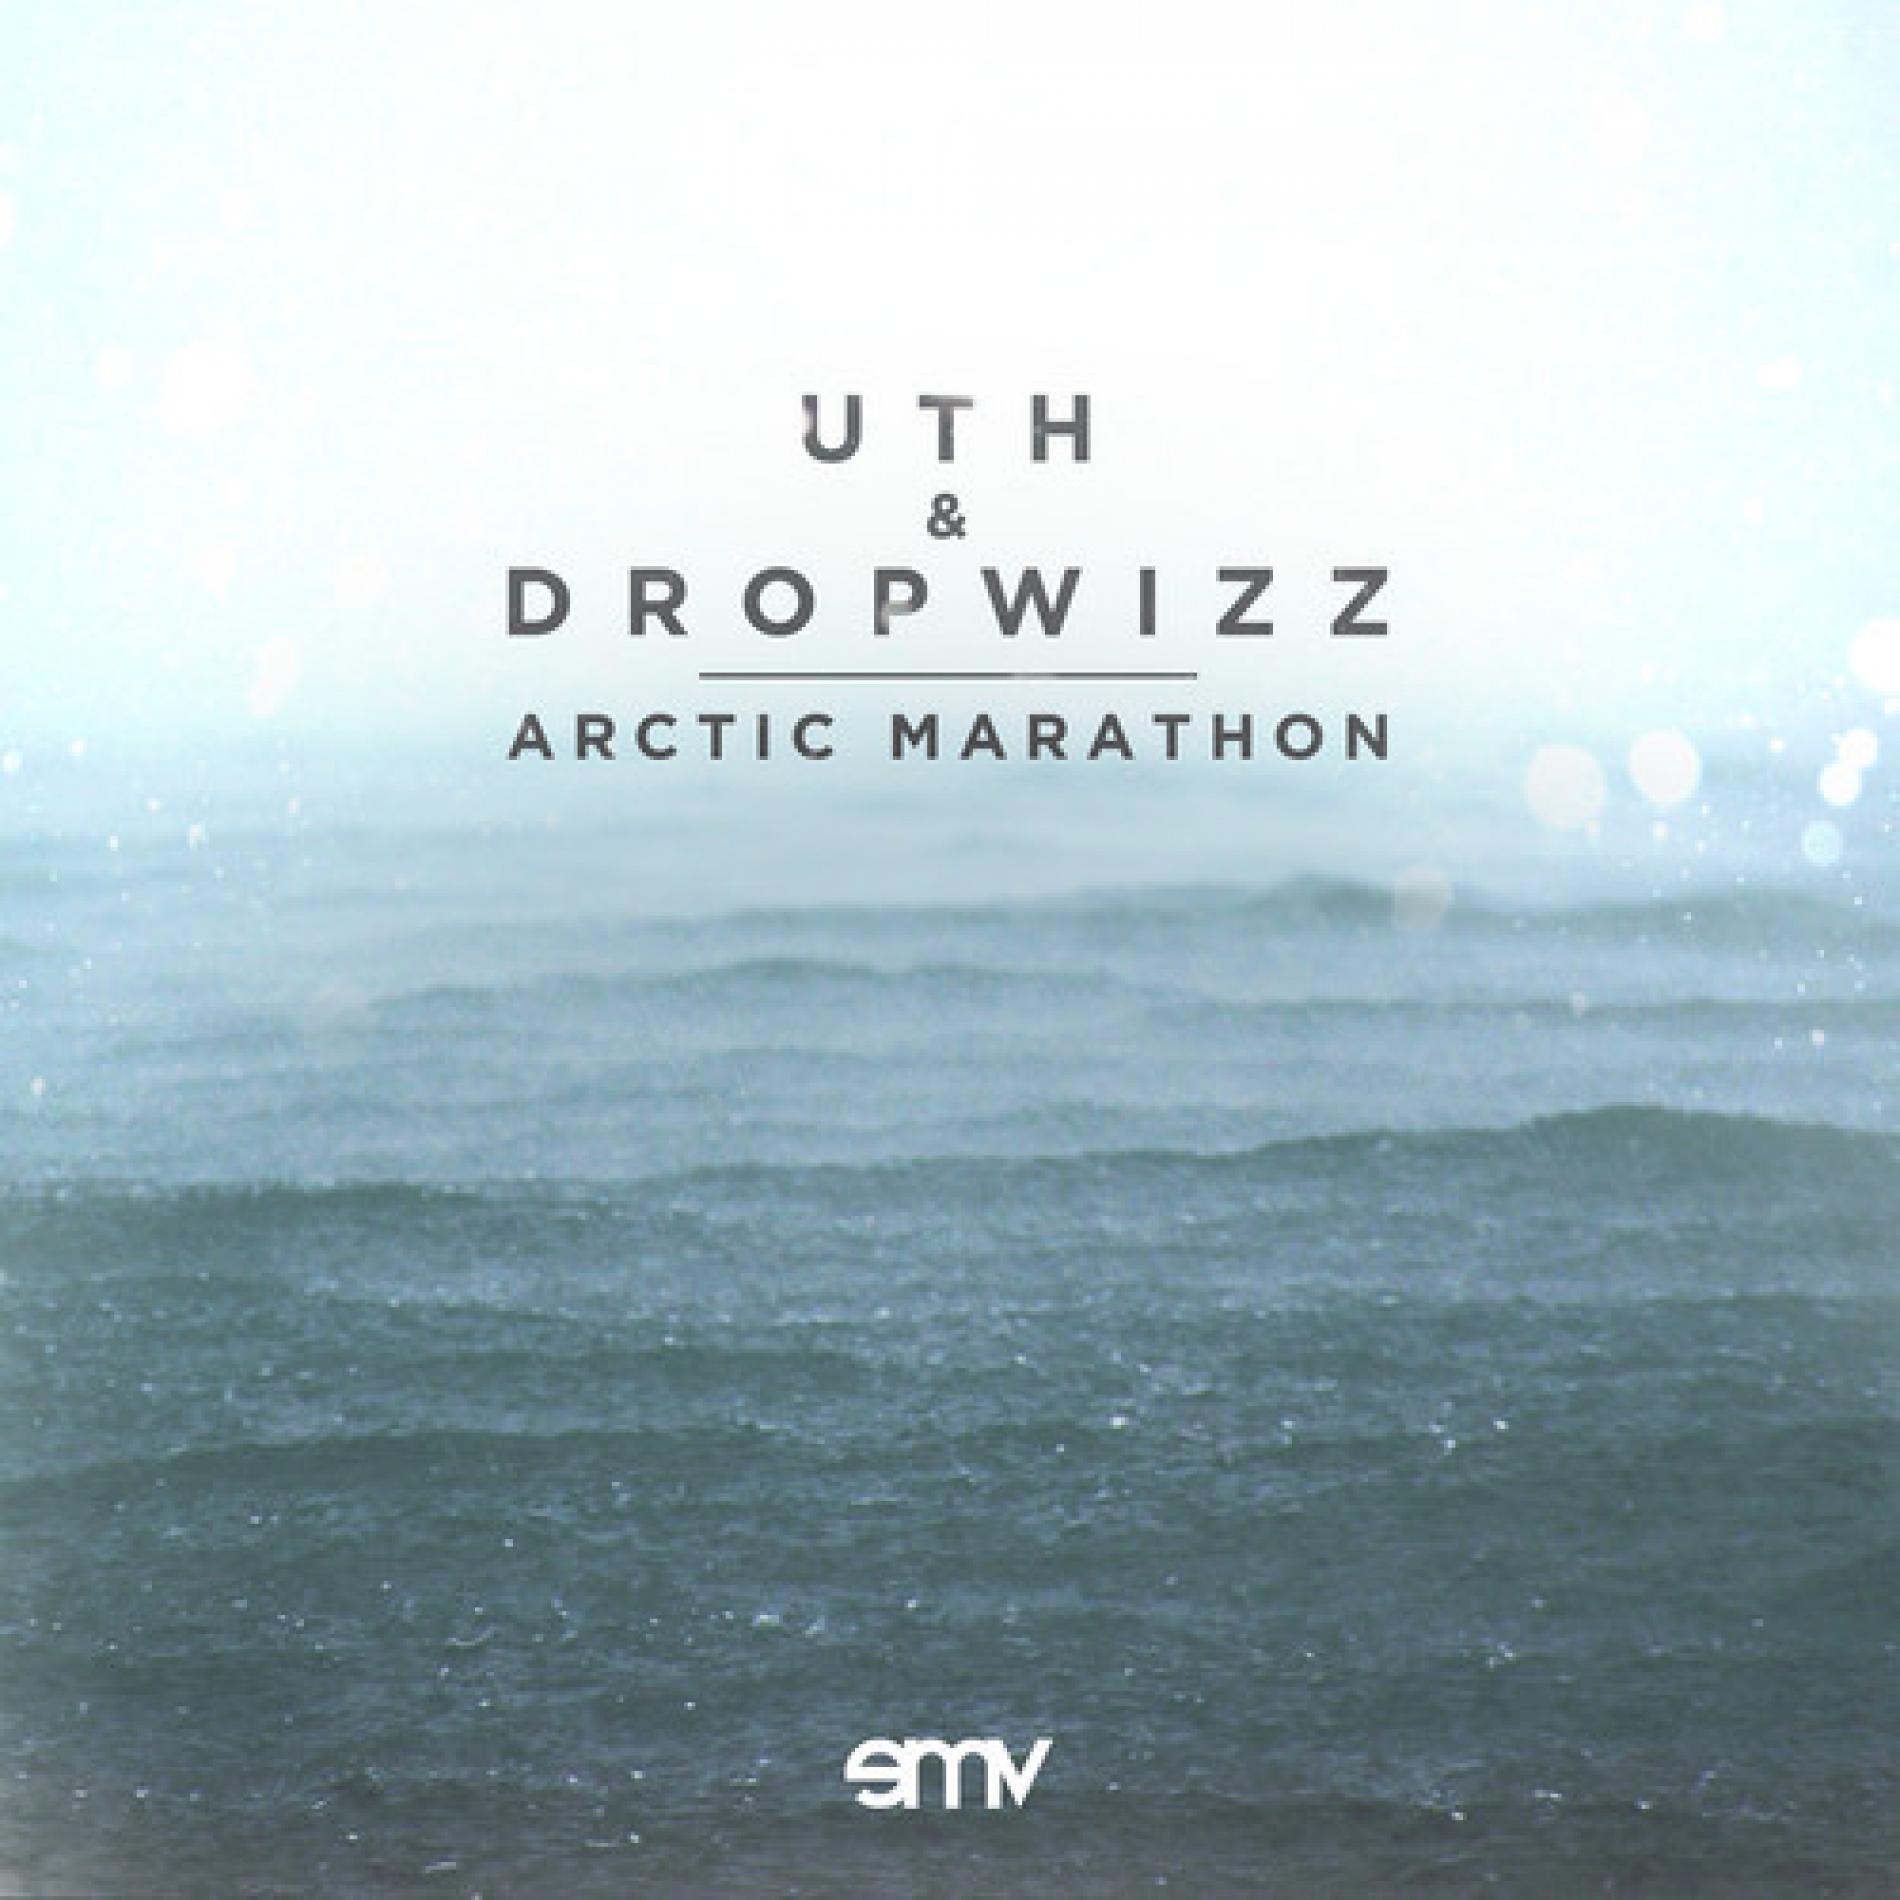 Uth & Dropwizz – Arctic Marathon